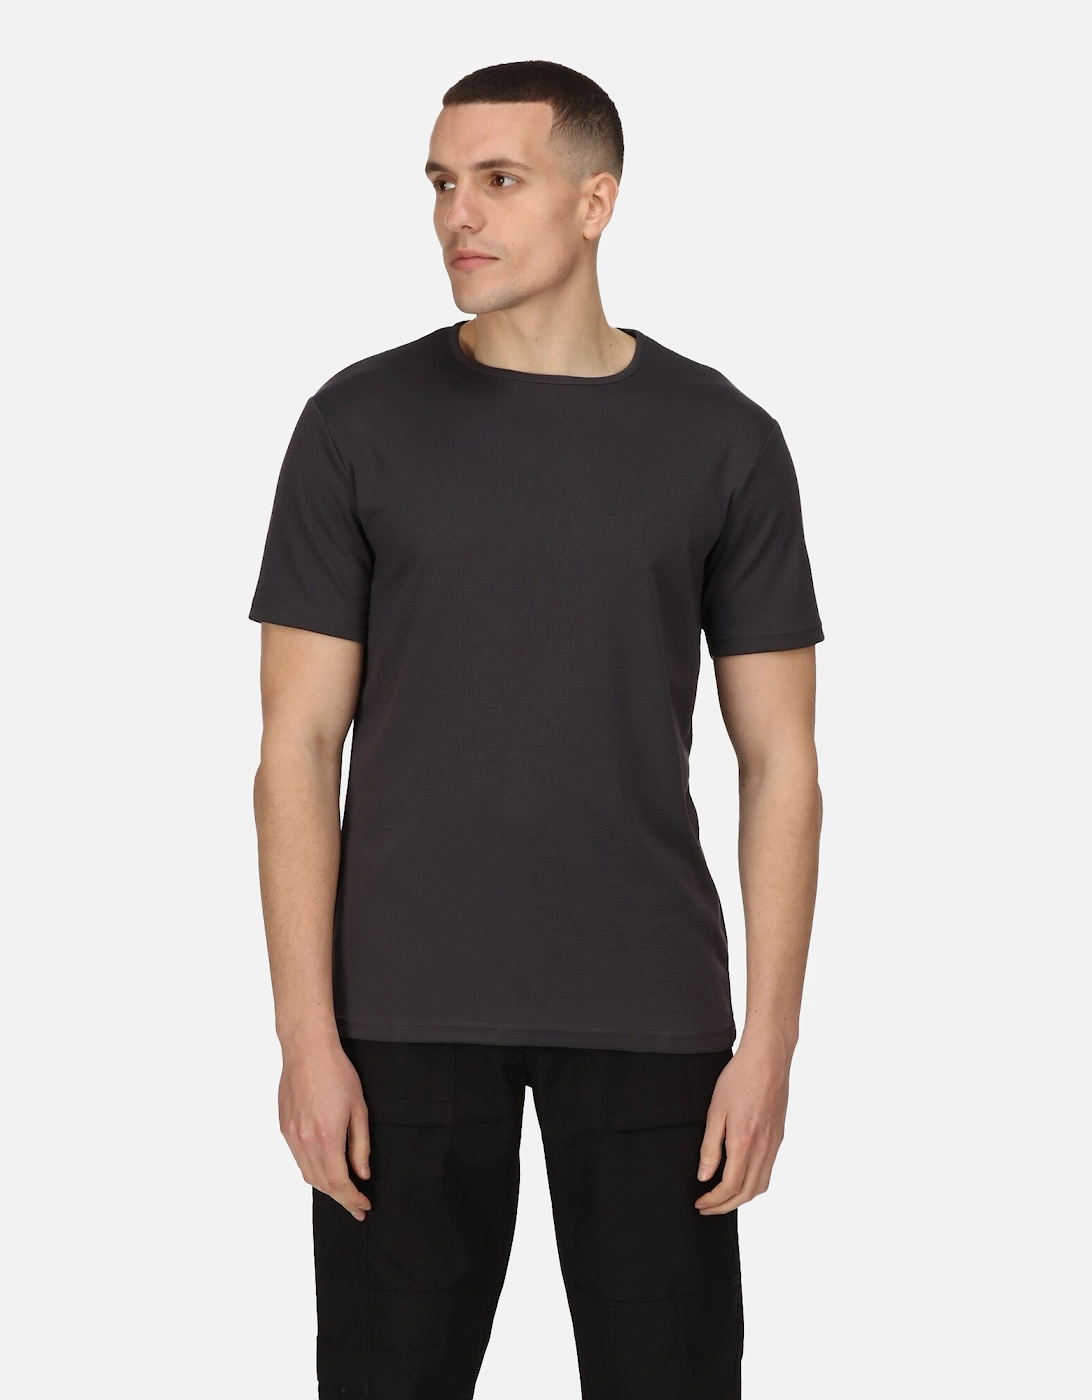 Mens Pro Reflective Moisture Wicking T-Shirt